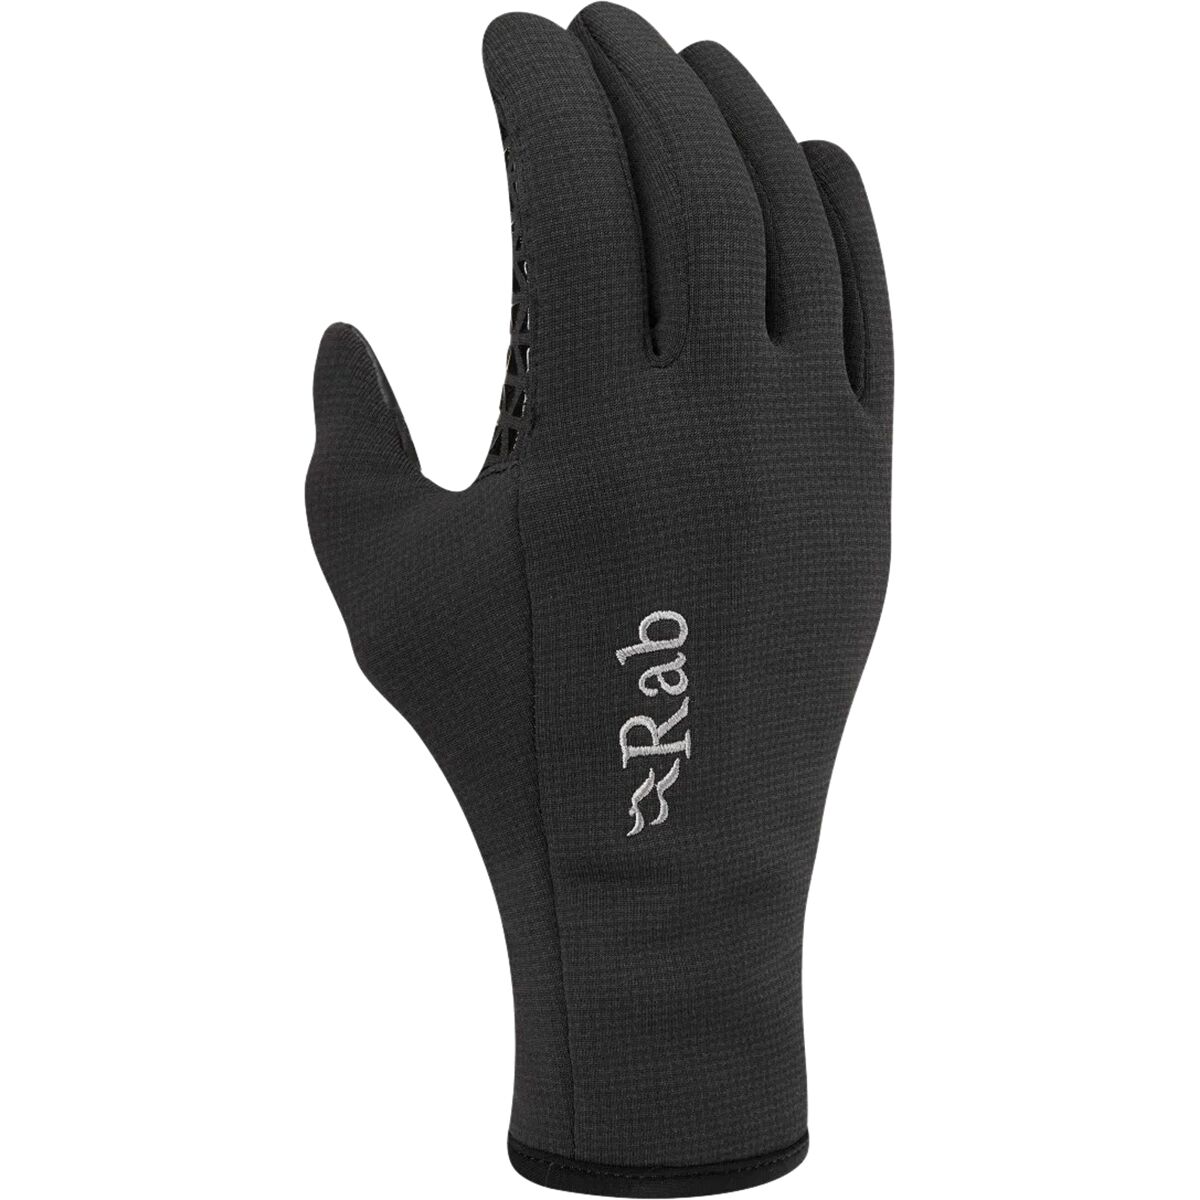 Rab Phantom Contact Grip Glove - Men's